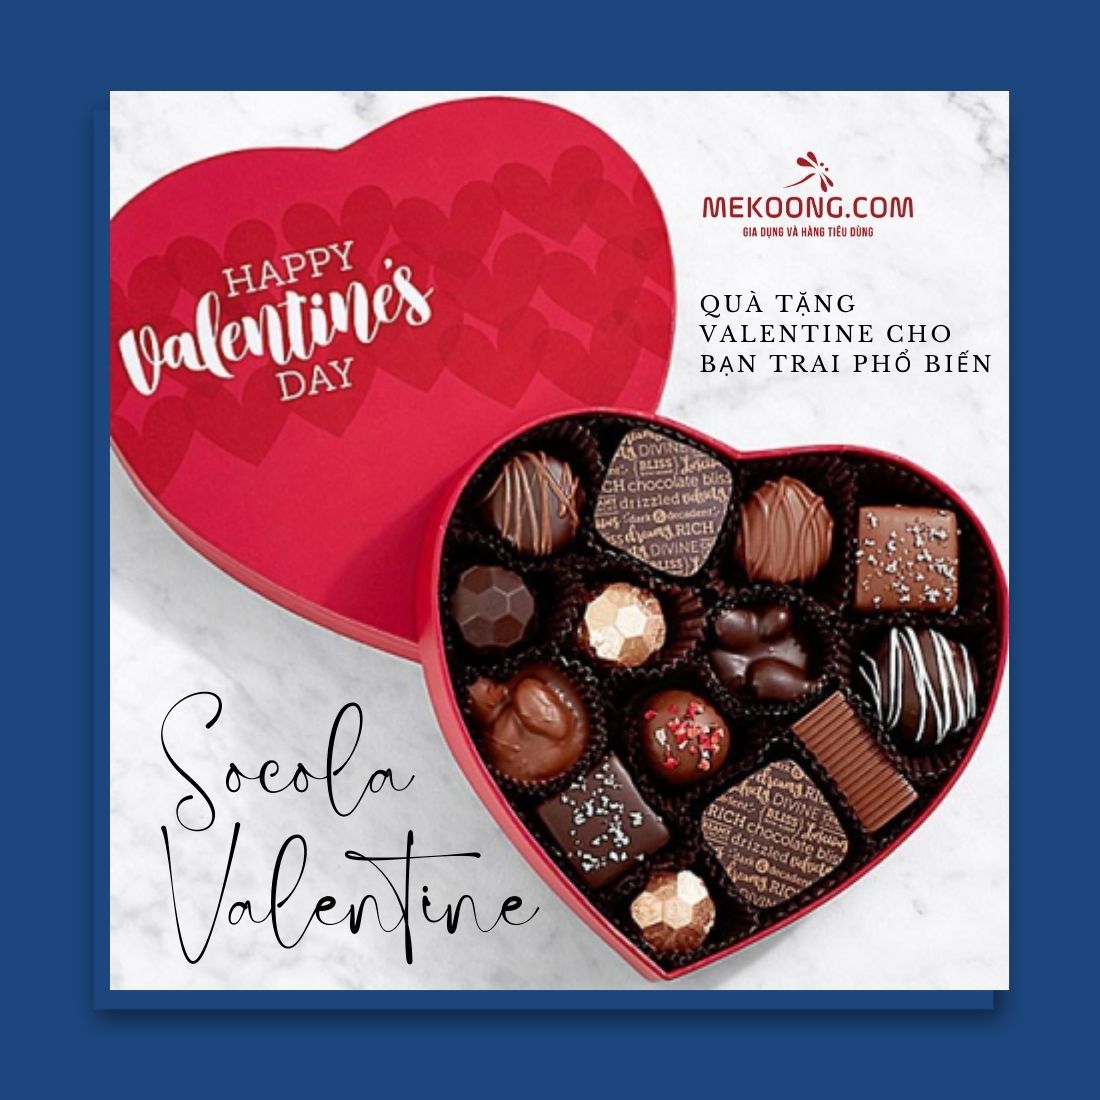 Socola Valentine quà tặng valentine cho bạn trai phổ biến